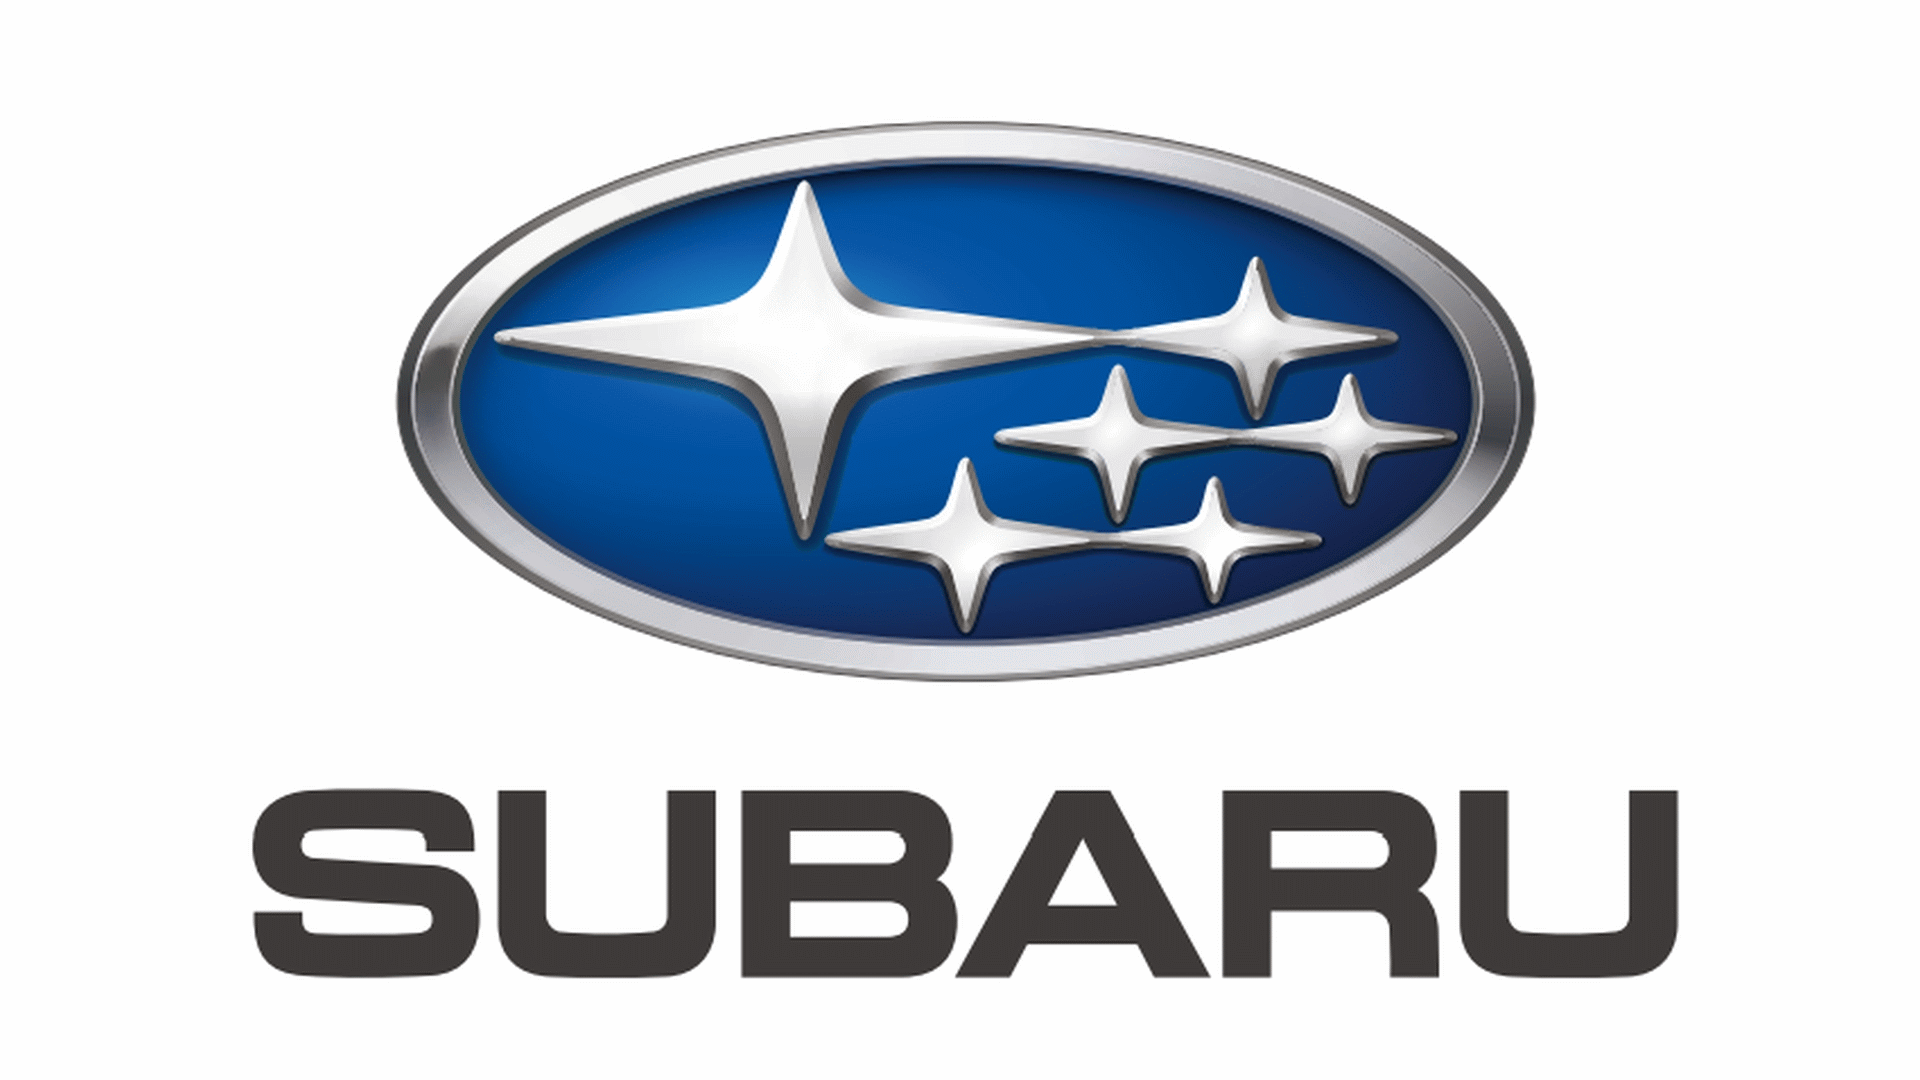 Read more about: Subaru